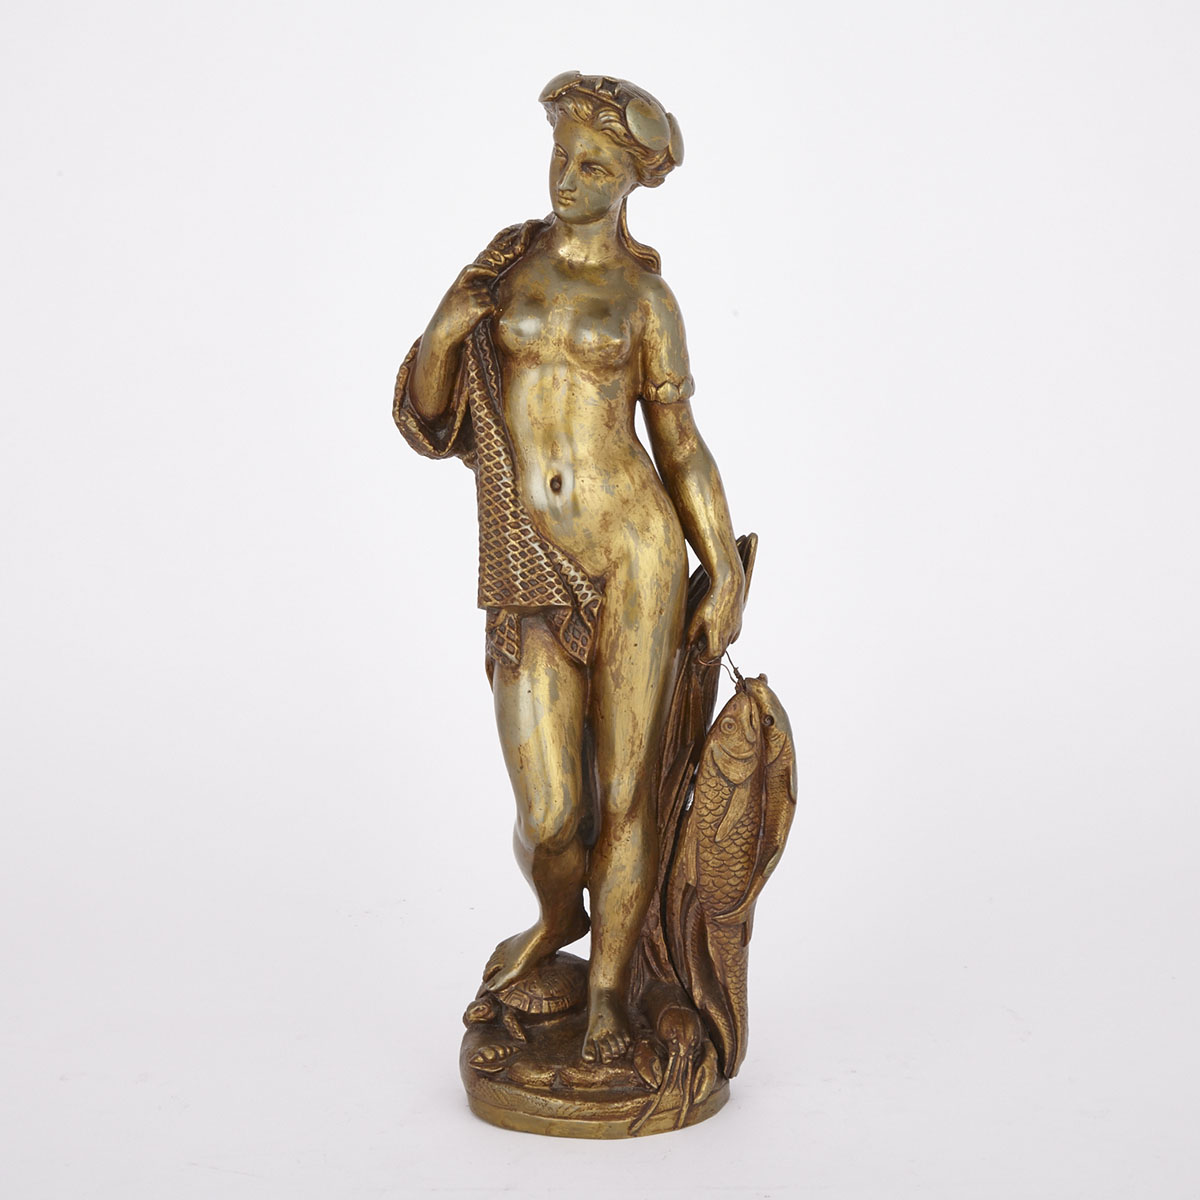 Continental Gilt Bronze Figure of Amphitrite, Goddess of the Sea, early 20th century